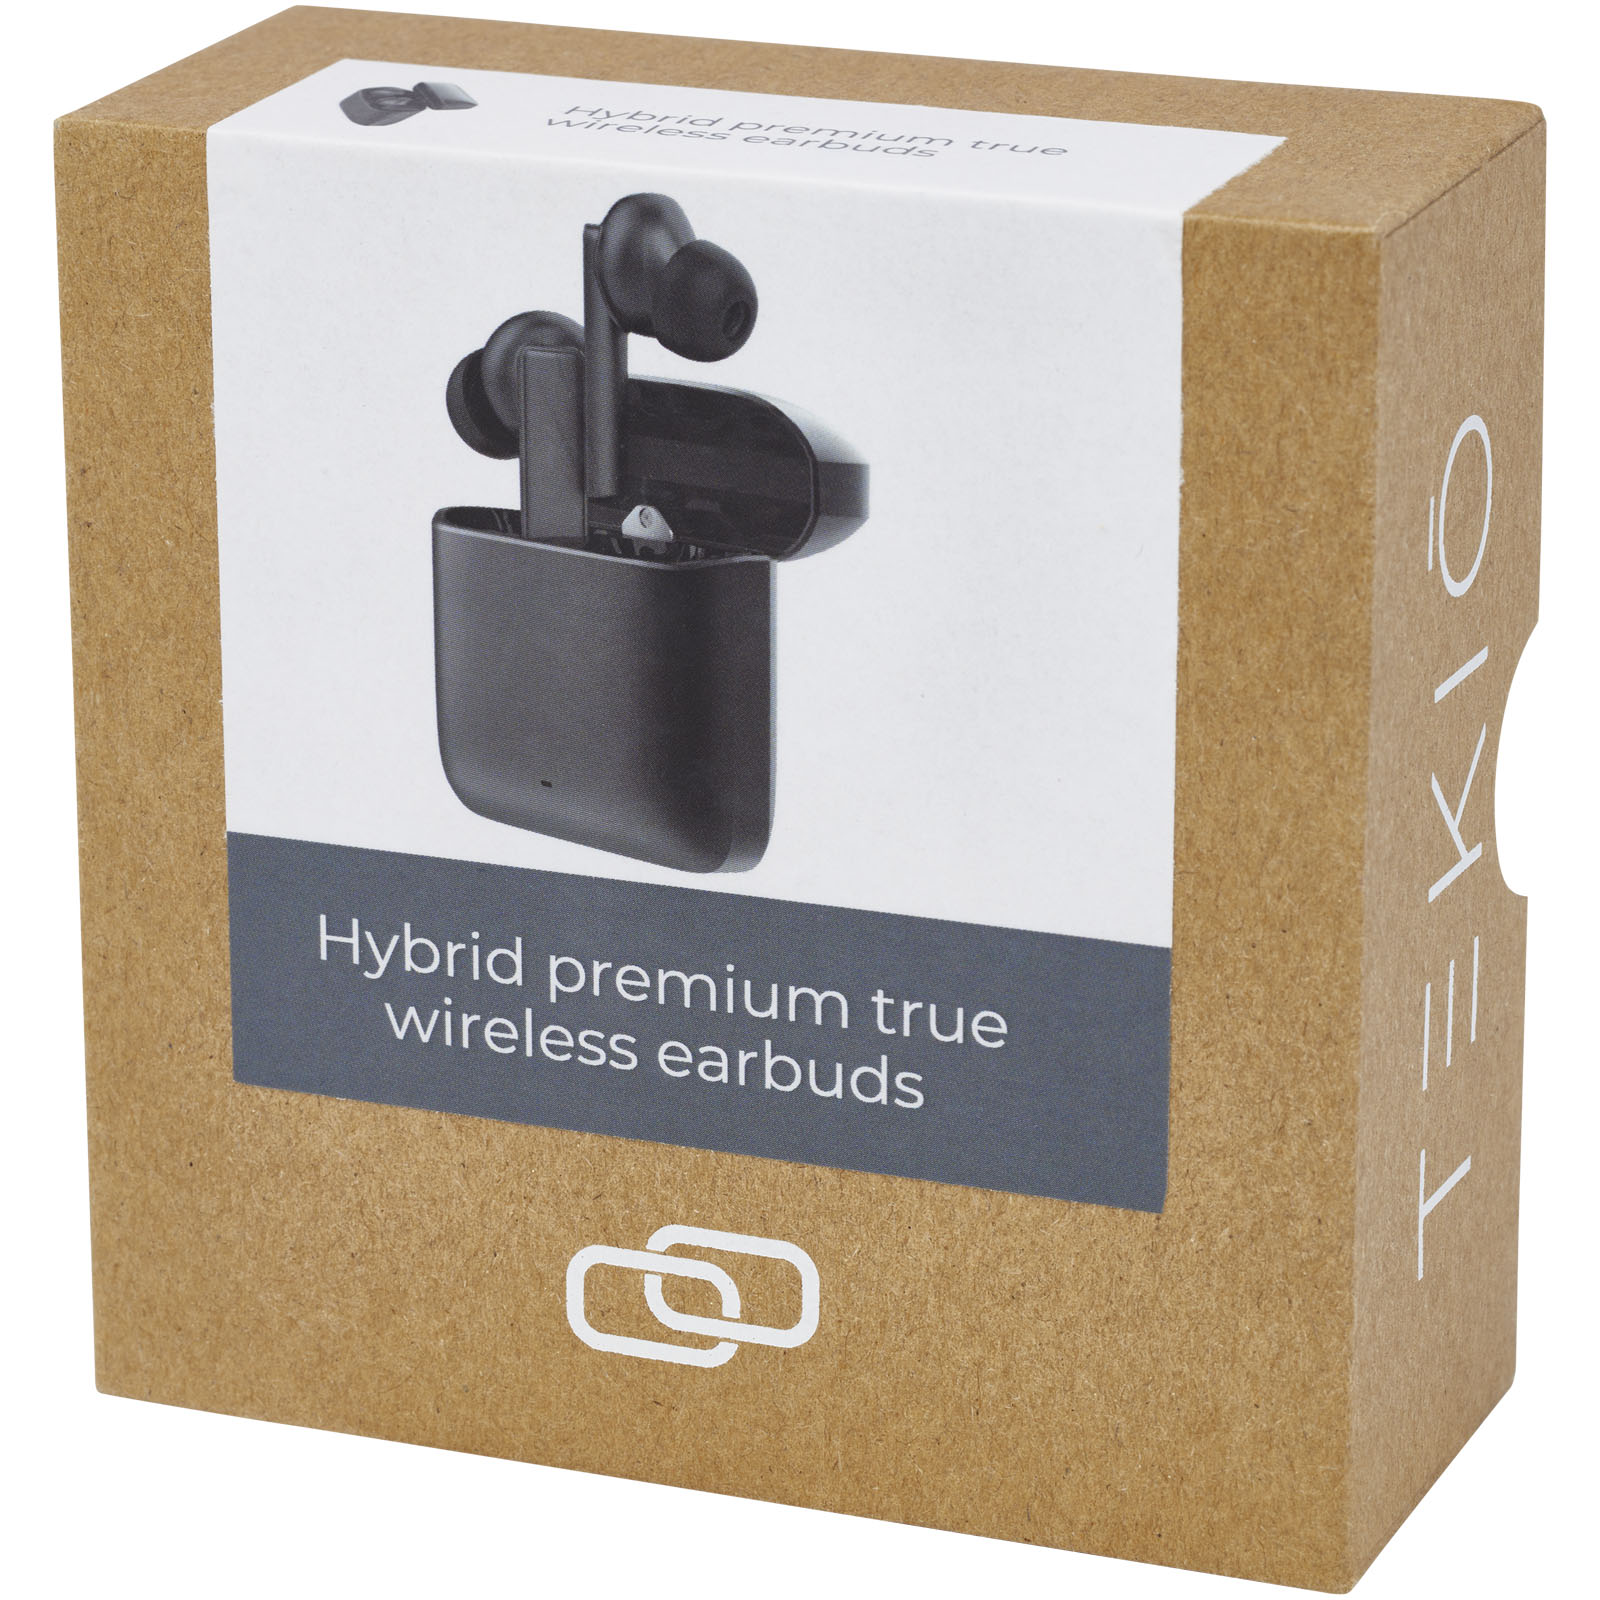 Advertising Earbuds - Hybrid premium True Wireless earbuds - 1